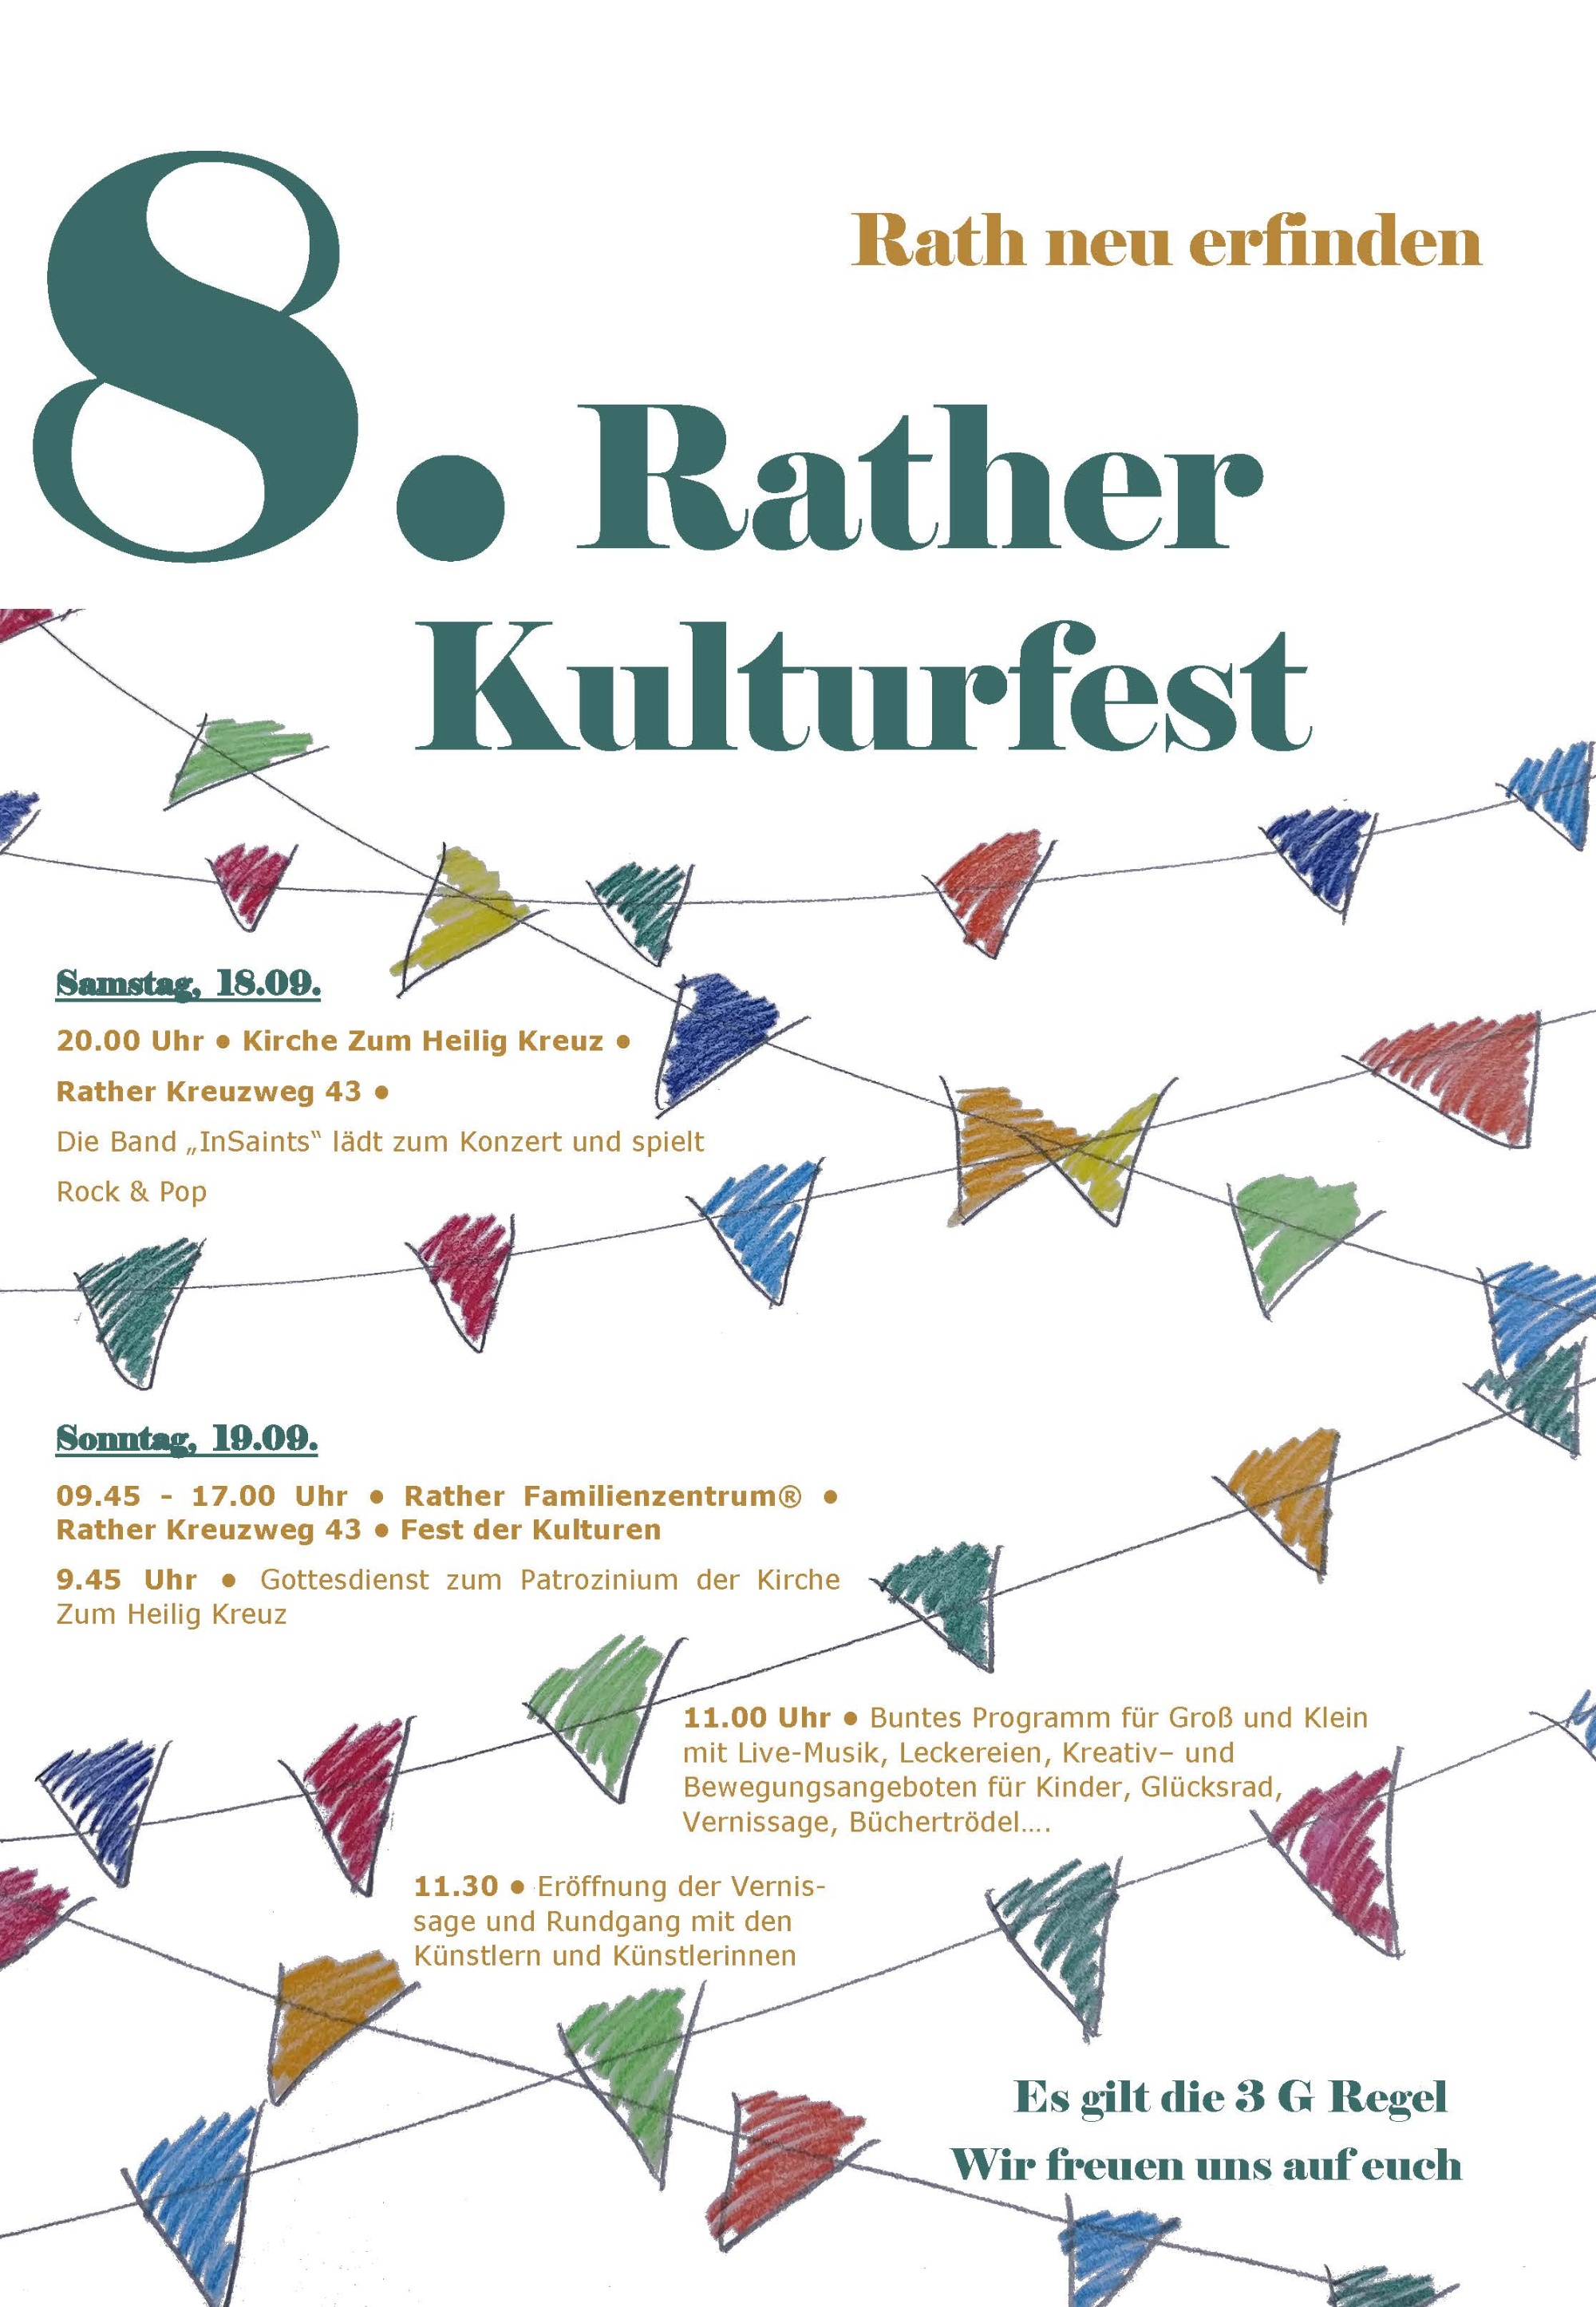 Rather Kulturfest 2021